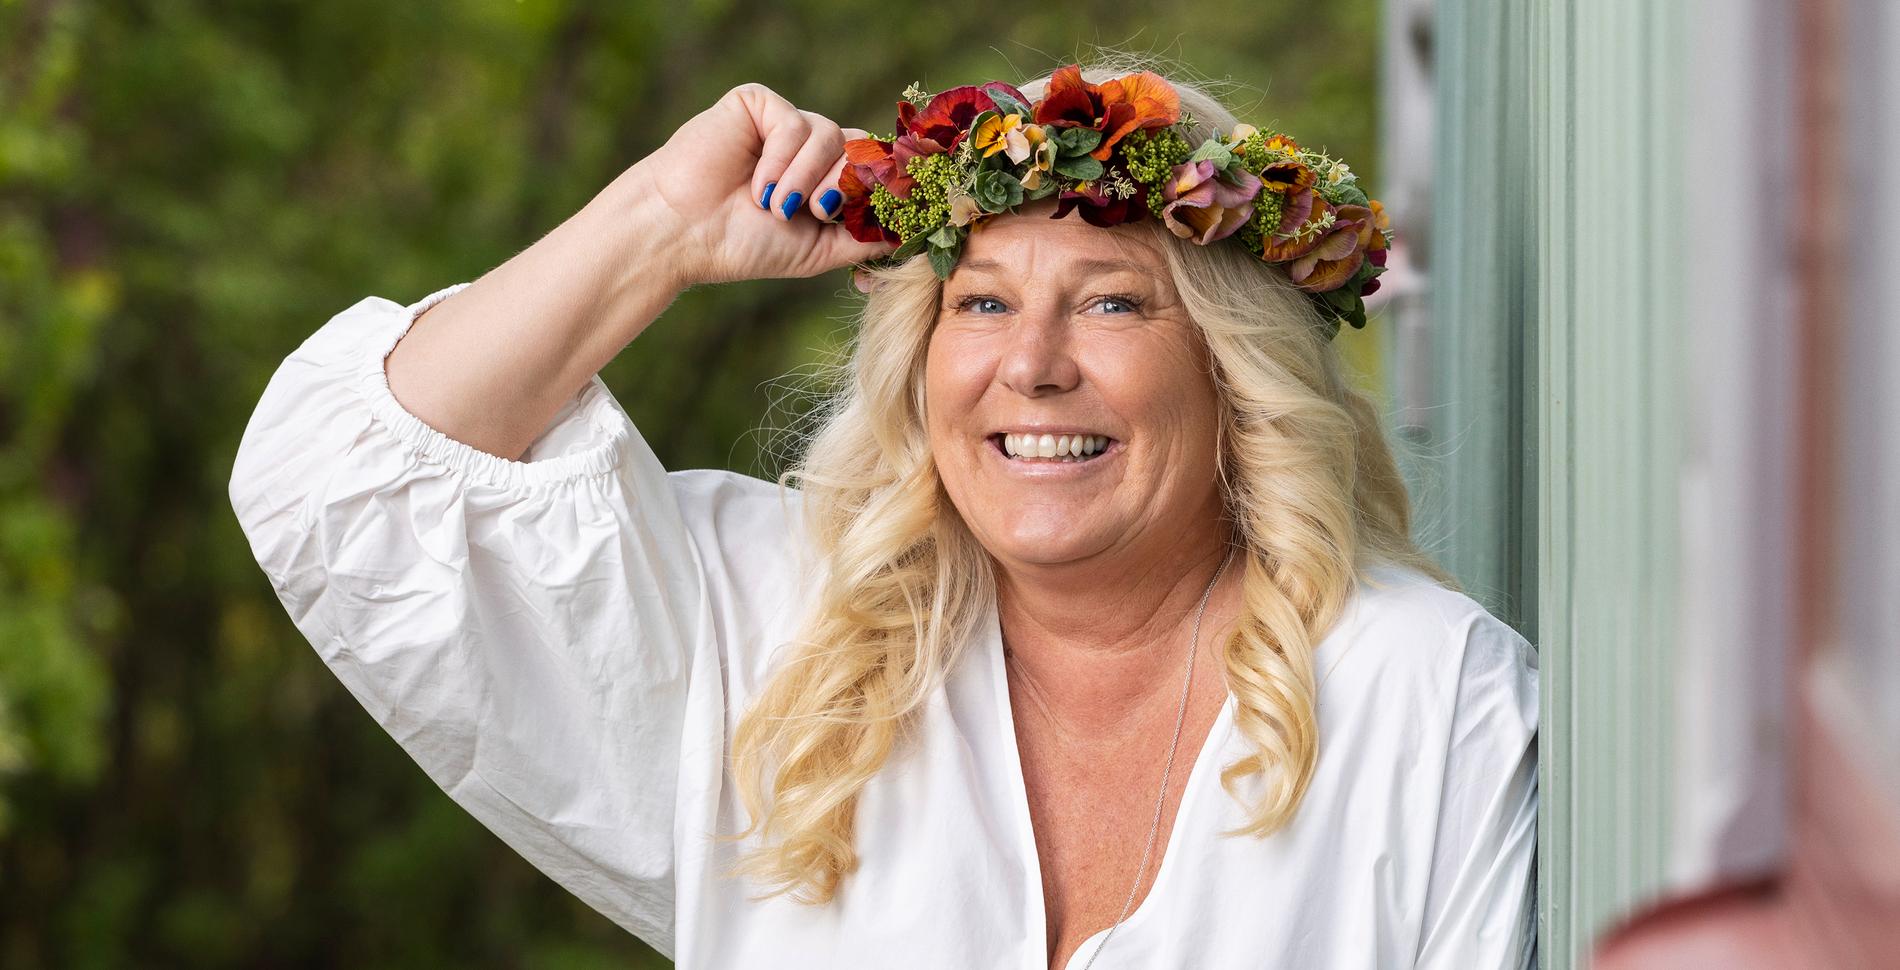 Mia Parnevik blev hela Sveriges mamma genom tv-serien ”Parneviks”.